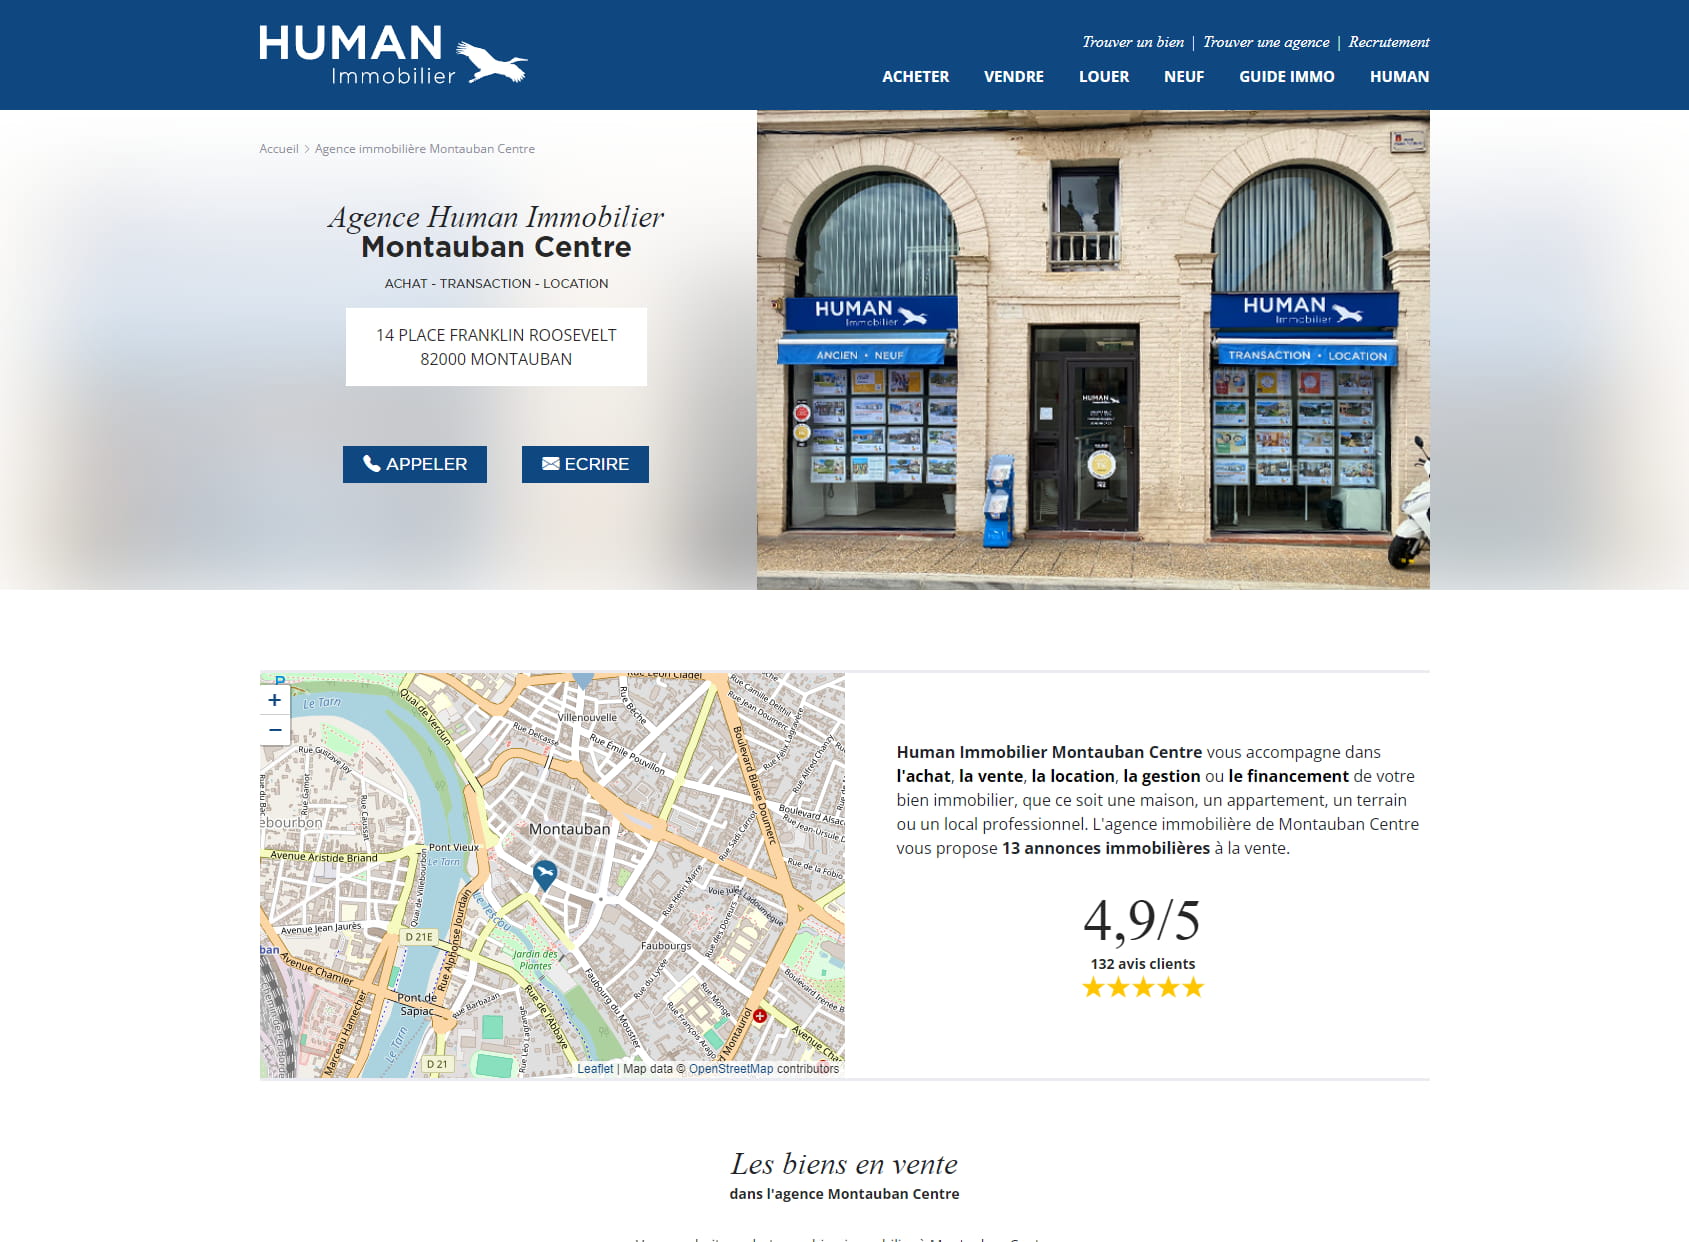 Human Immobilier Montauban Centre